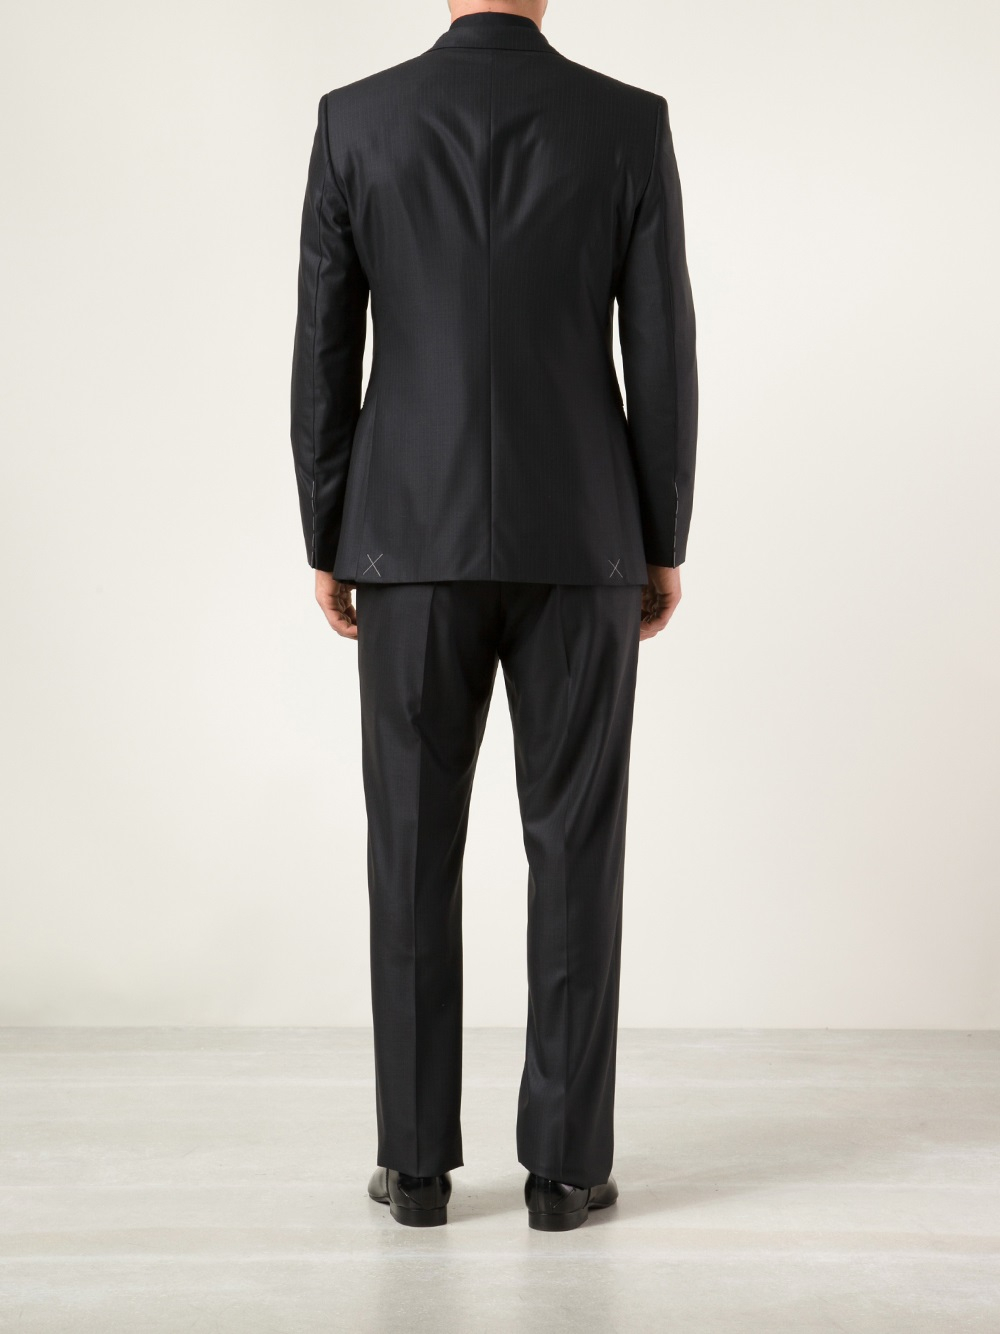 Lyst - Giorgio Armani Taylor Suit in Black for Men